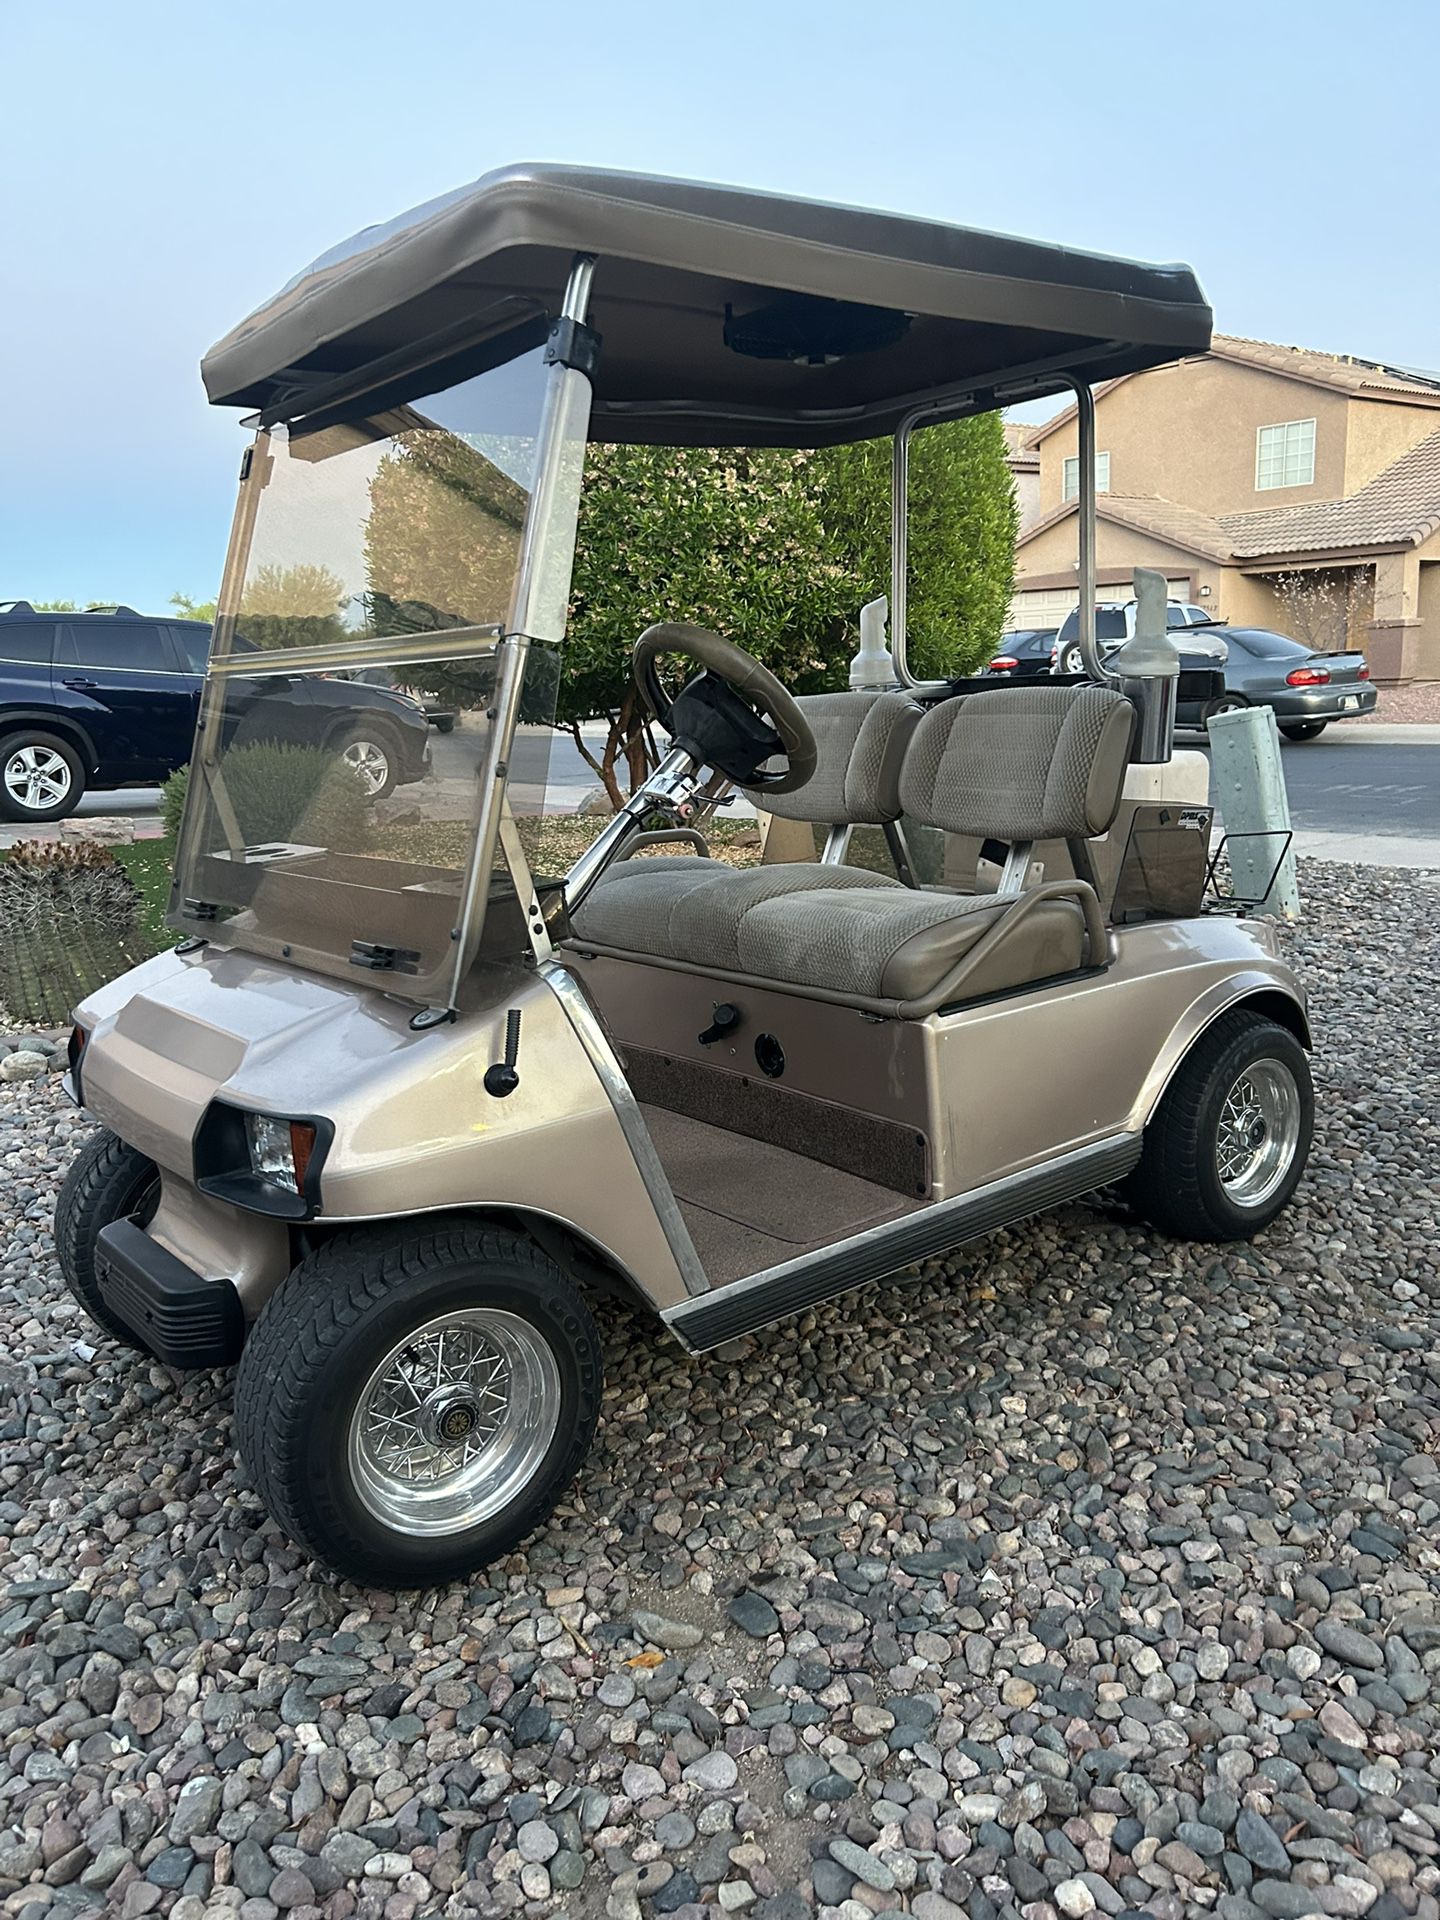 1997 Club  Car 48 V Golf Cart.